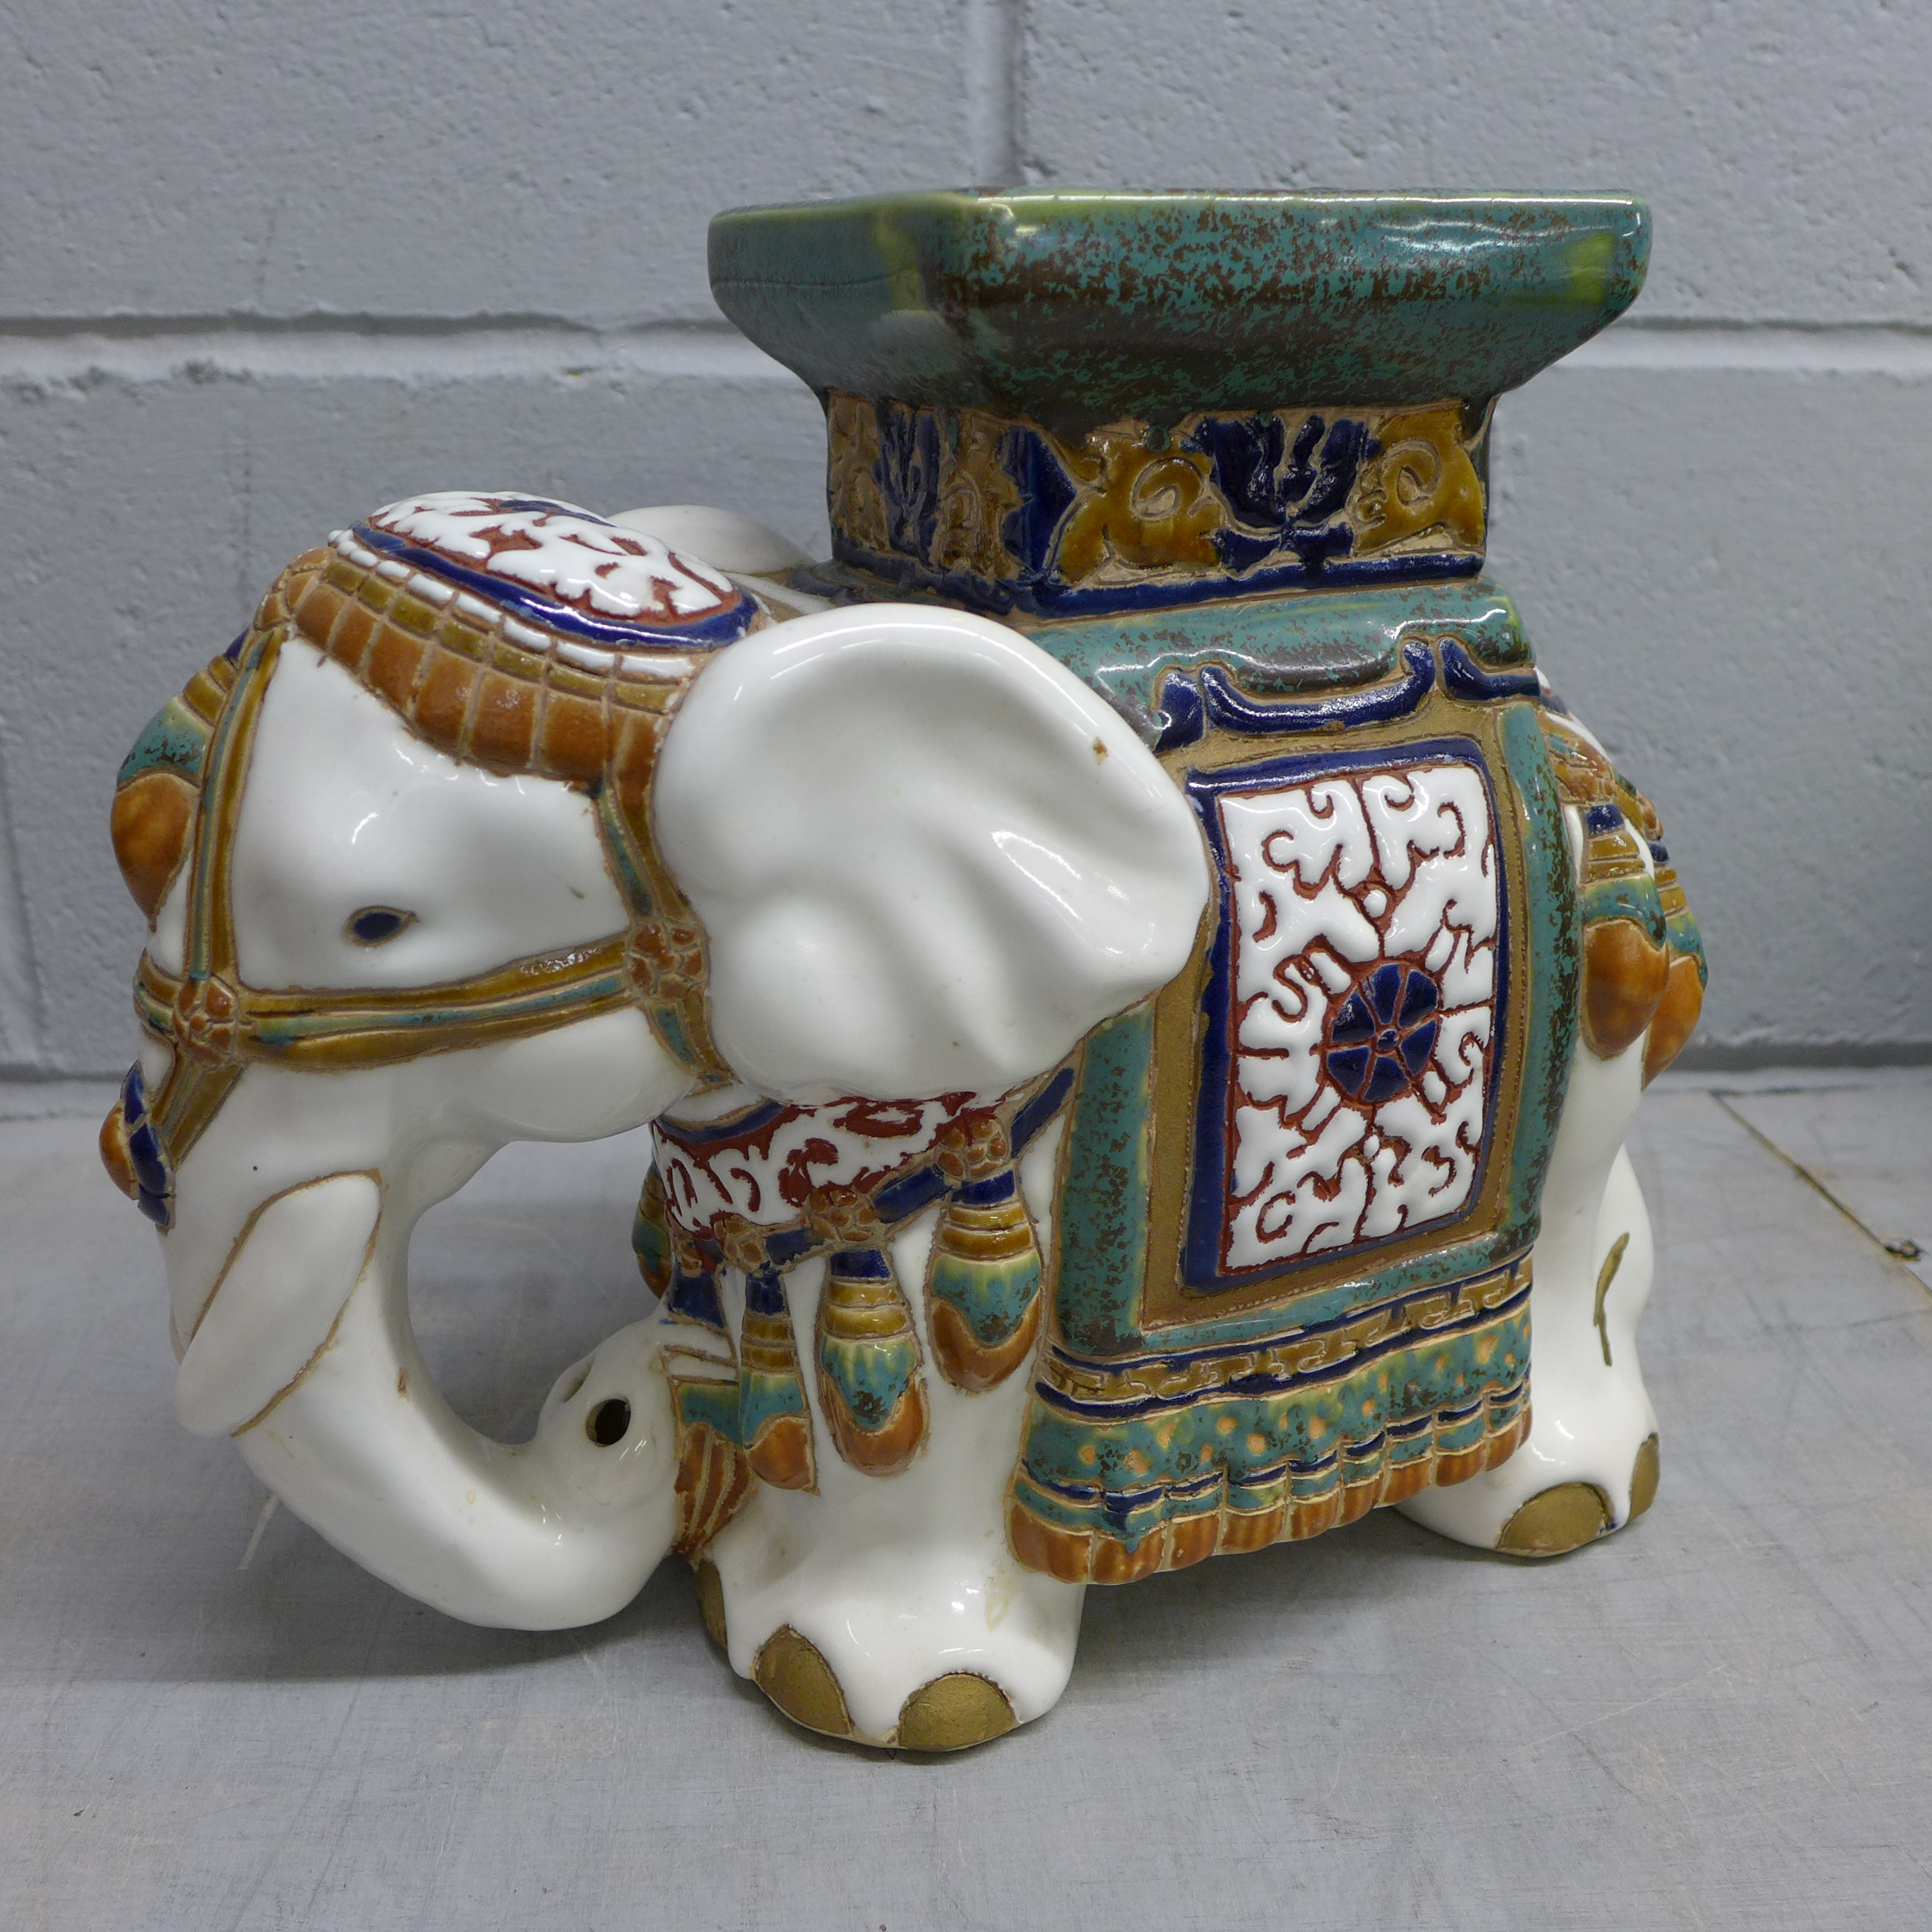 A ceramic elephant seat